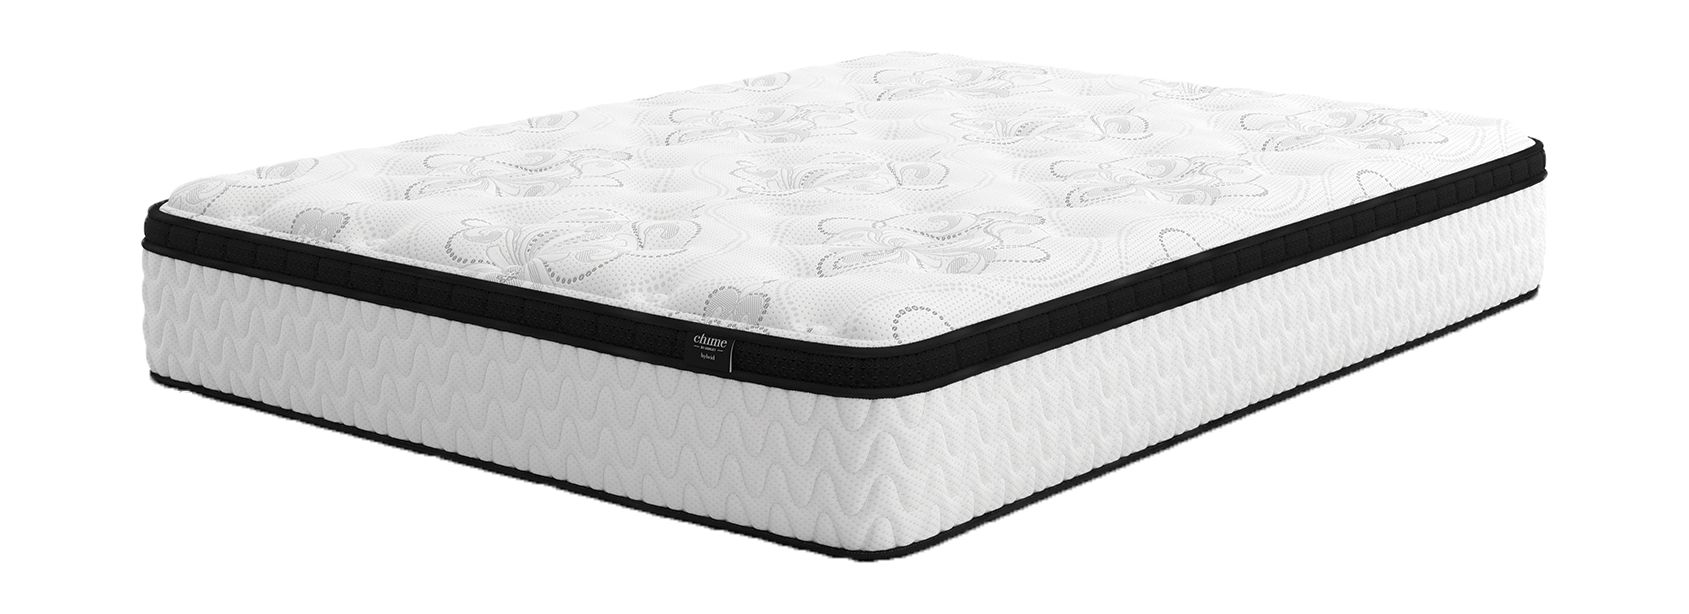 chime 12 inch hybrid queen mattress reviews